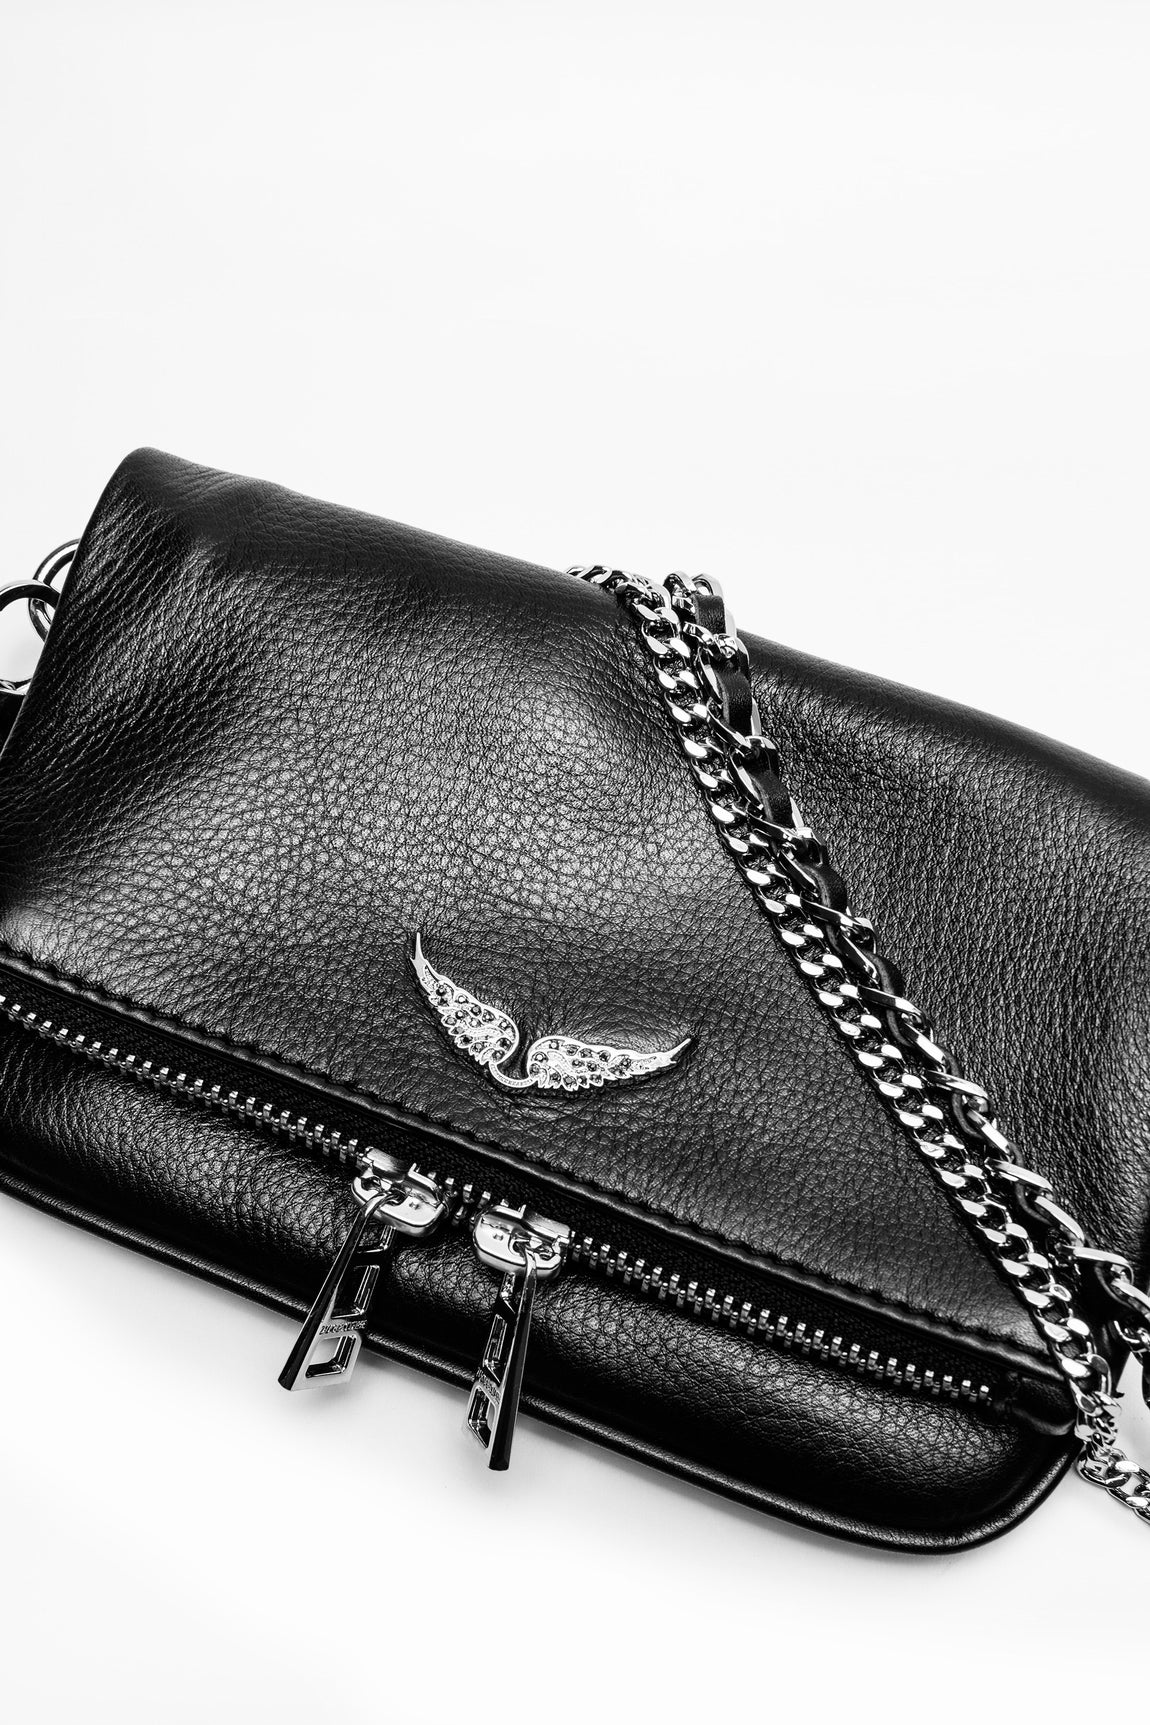 Rock Nano grained leather bag, black-silver